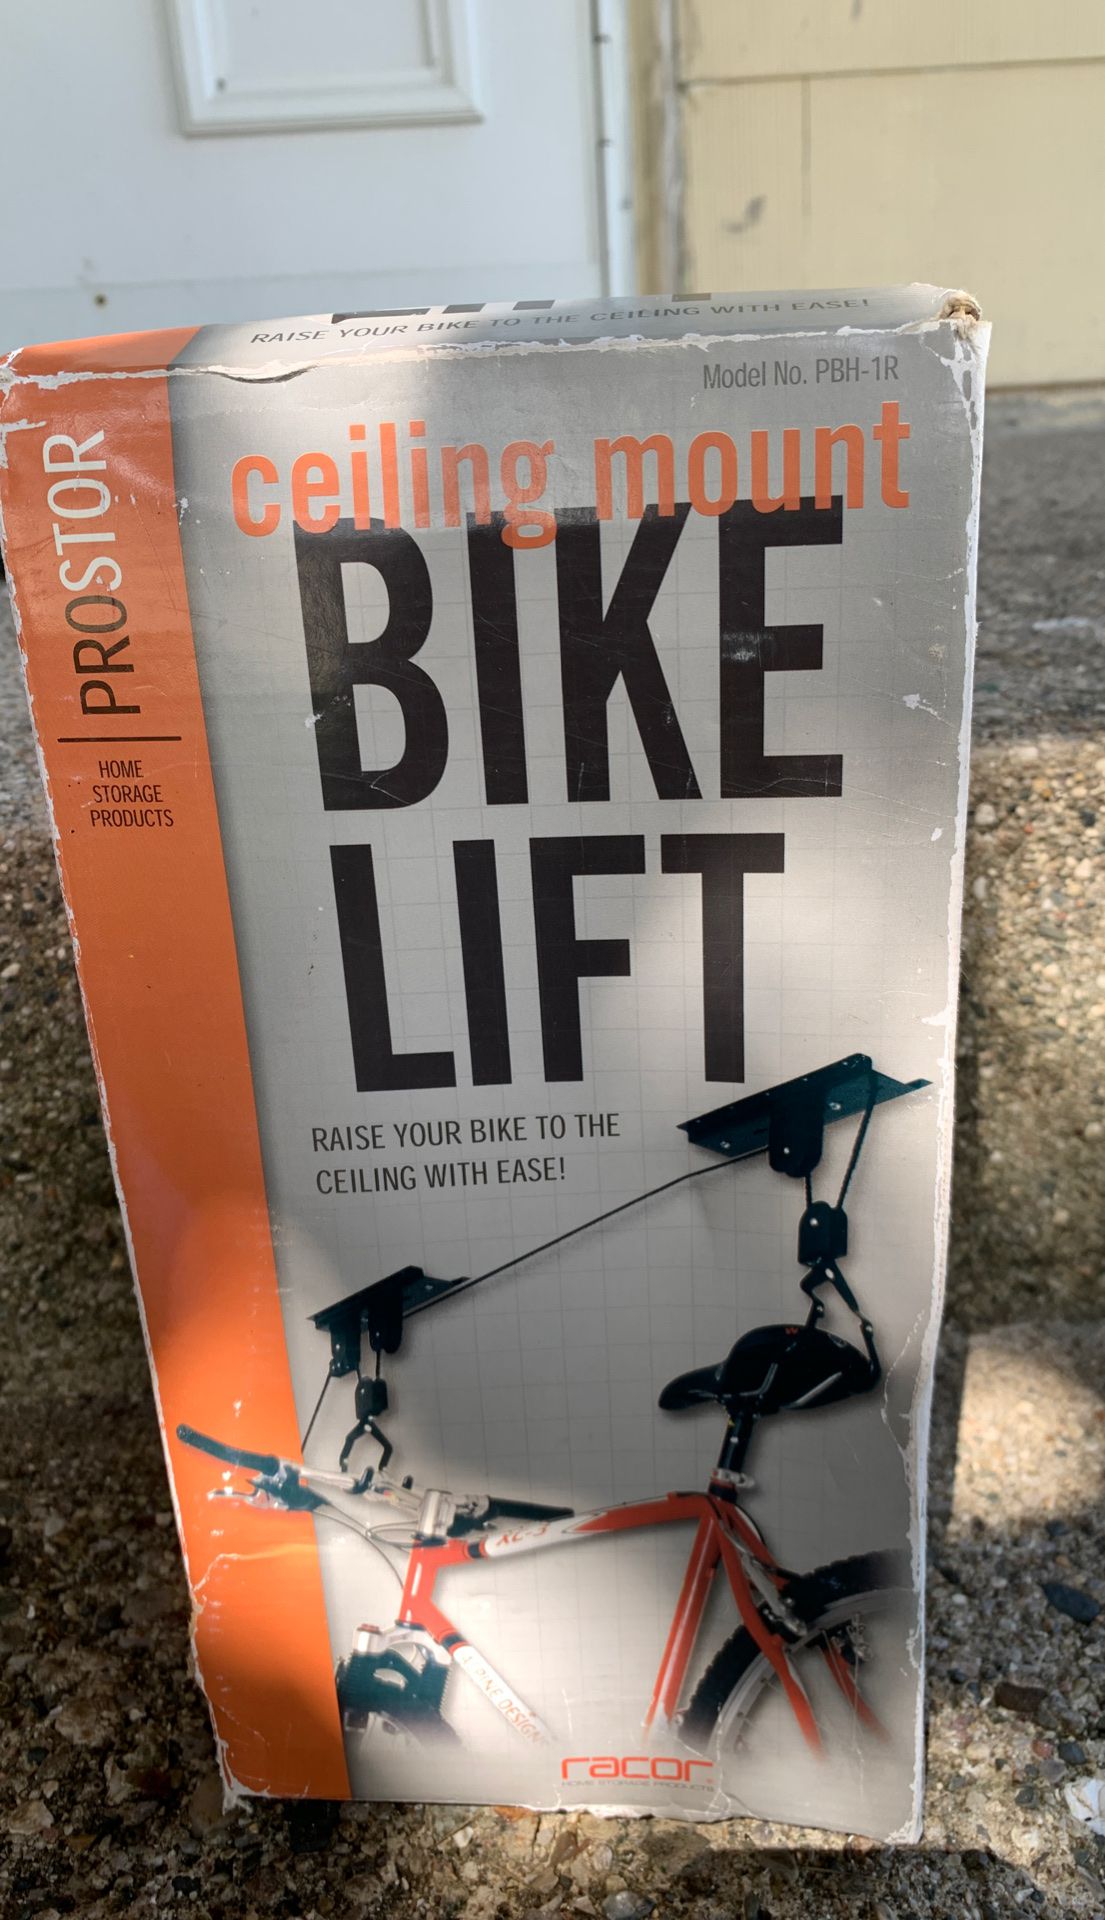 RACOR ceiling mount bike lift